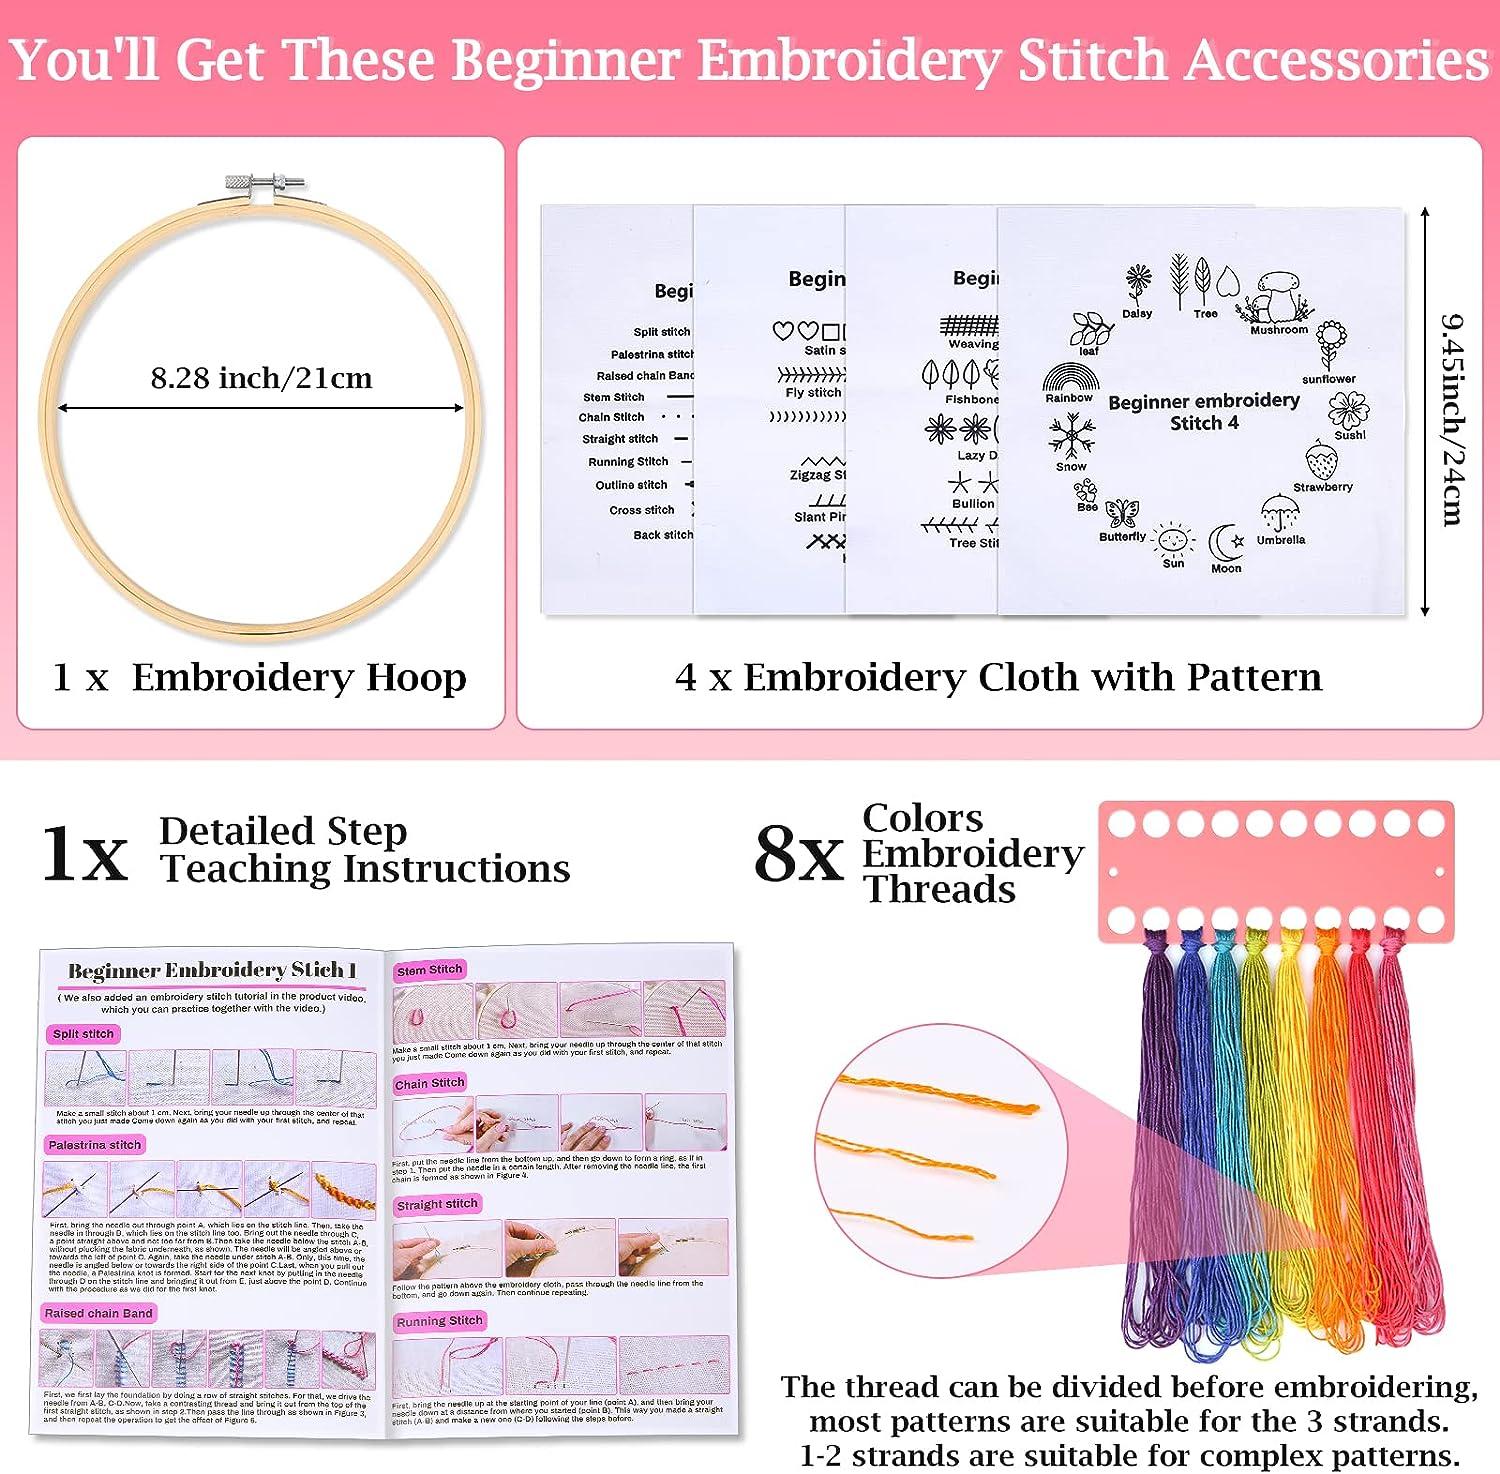 Sewing Stickers, needle, thread, scissors, thimble rainbow frame